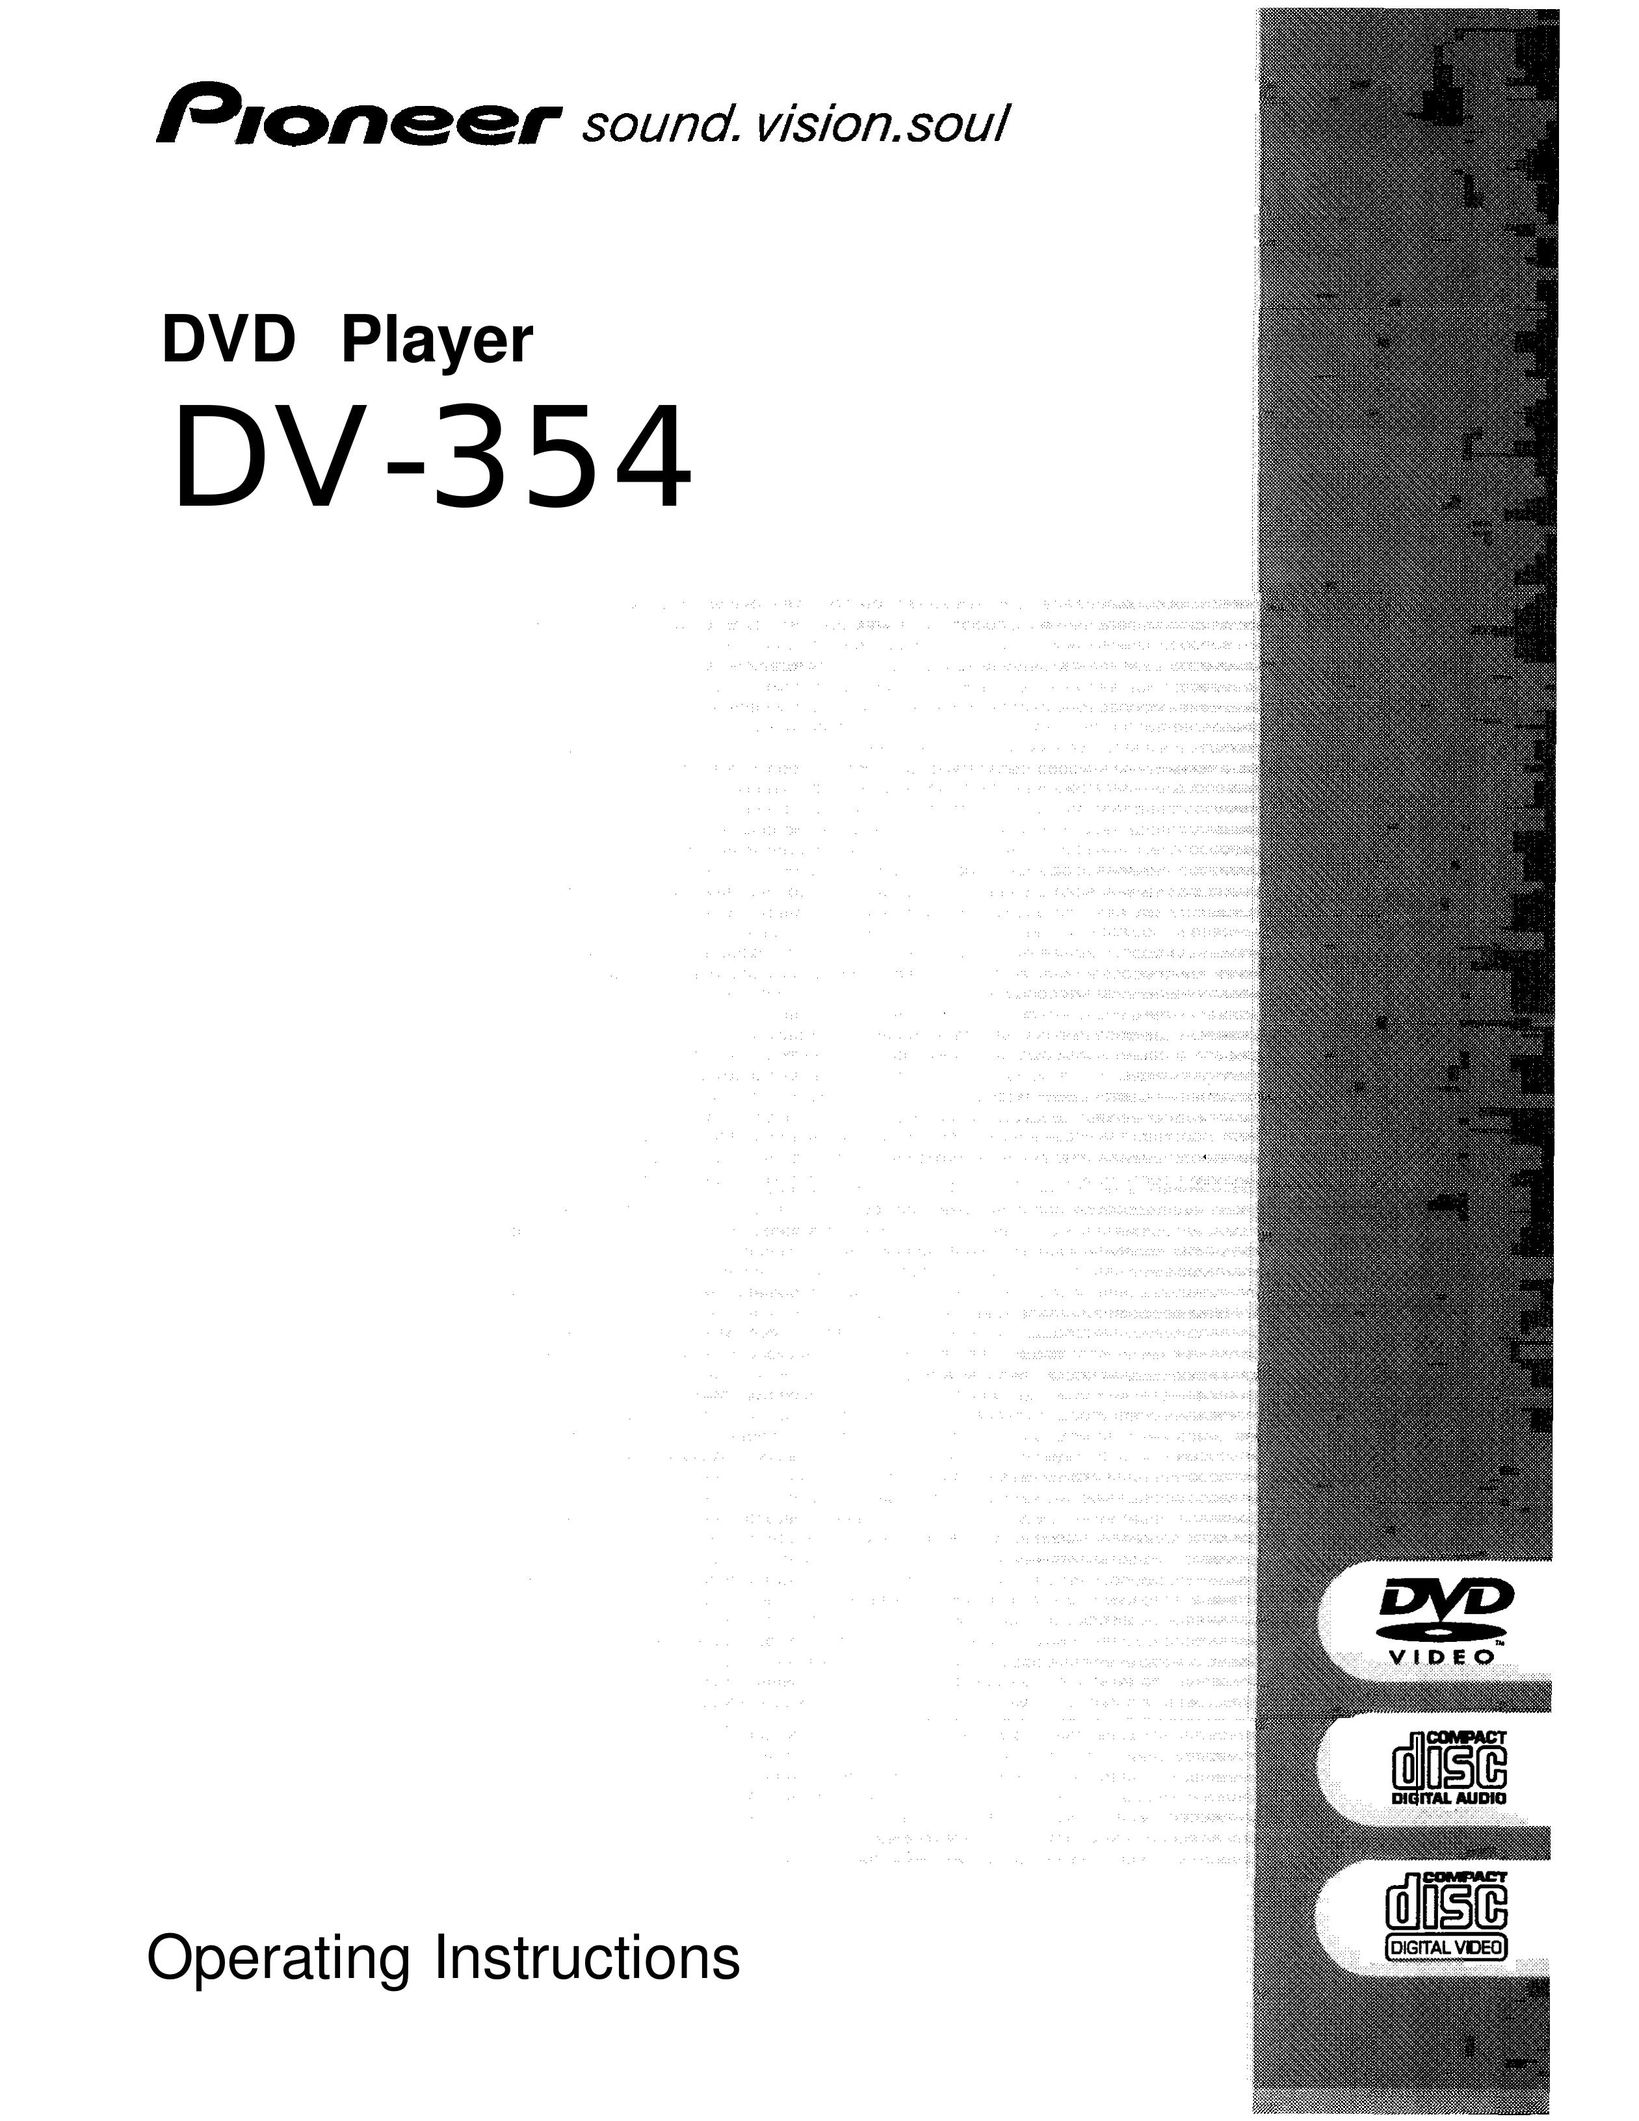 GE DV-354 DVD Player User Manual